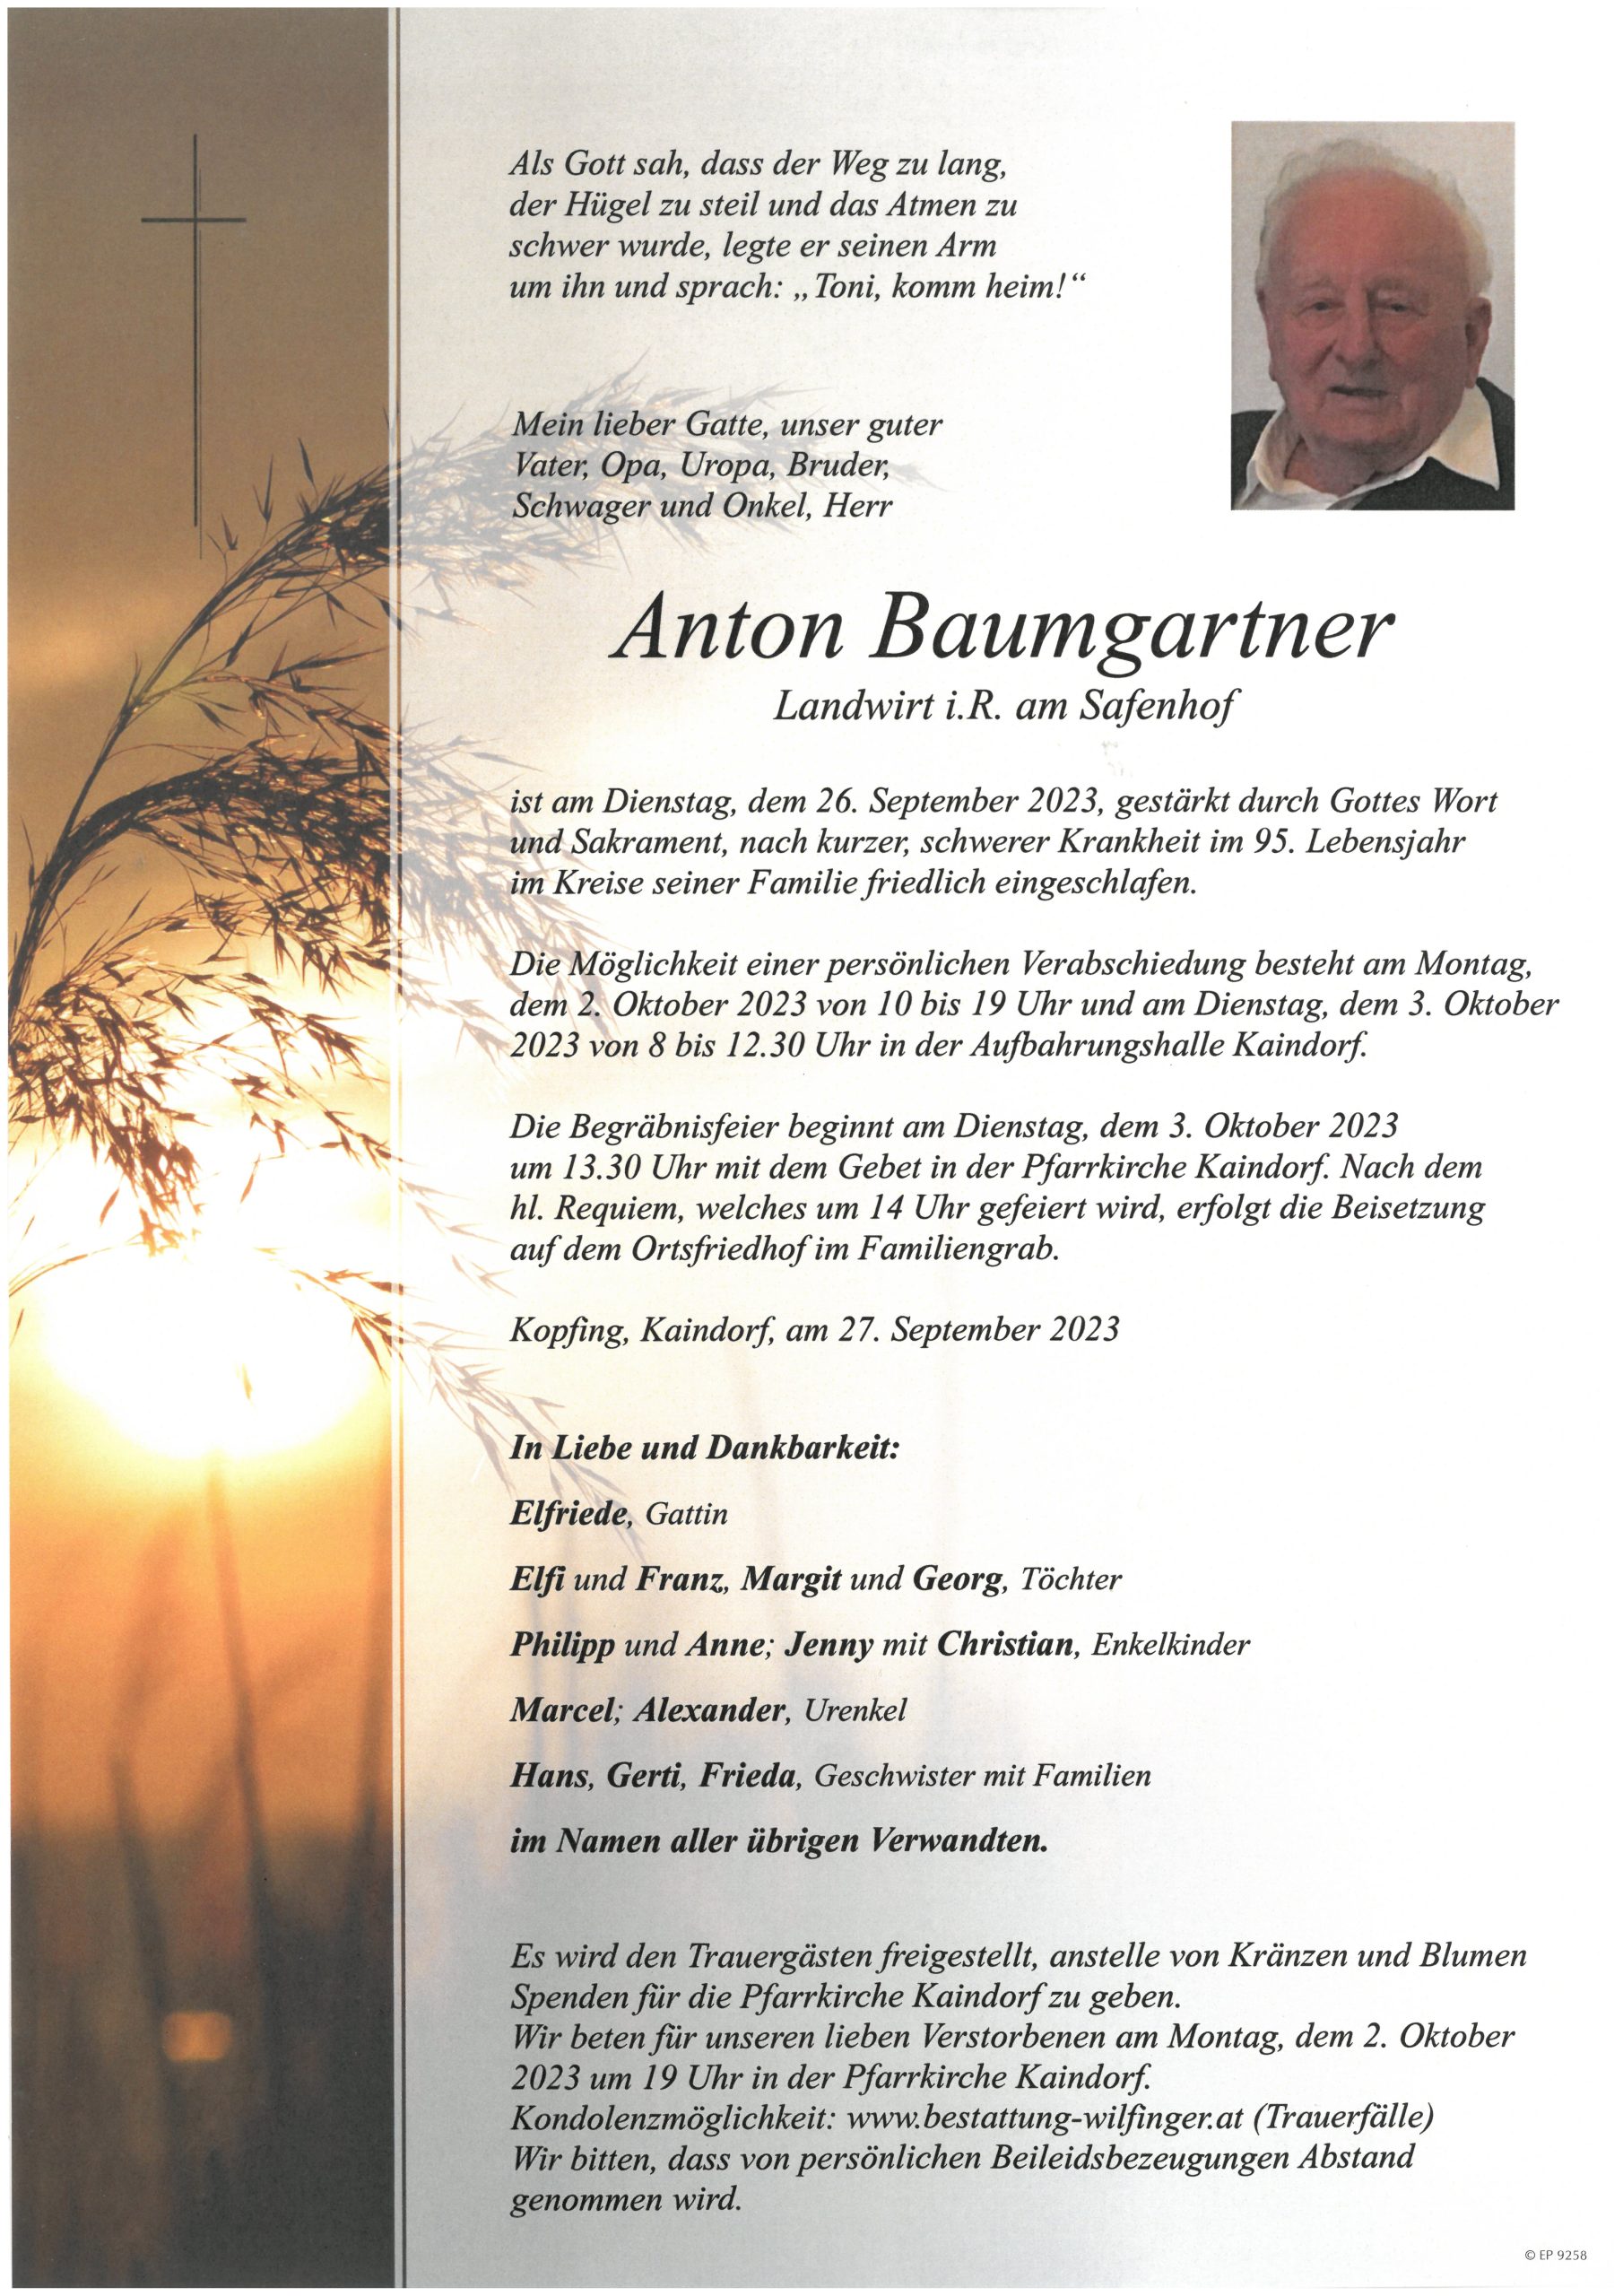 Anton Baumgartner, Safenhof